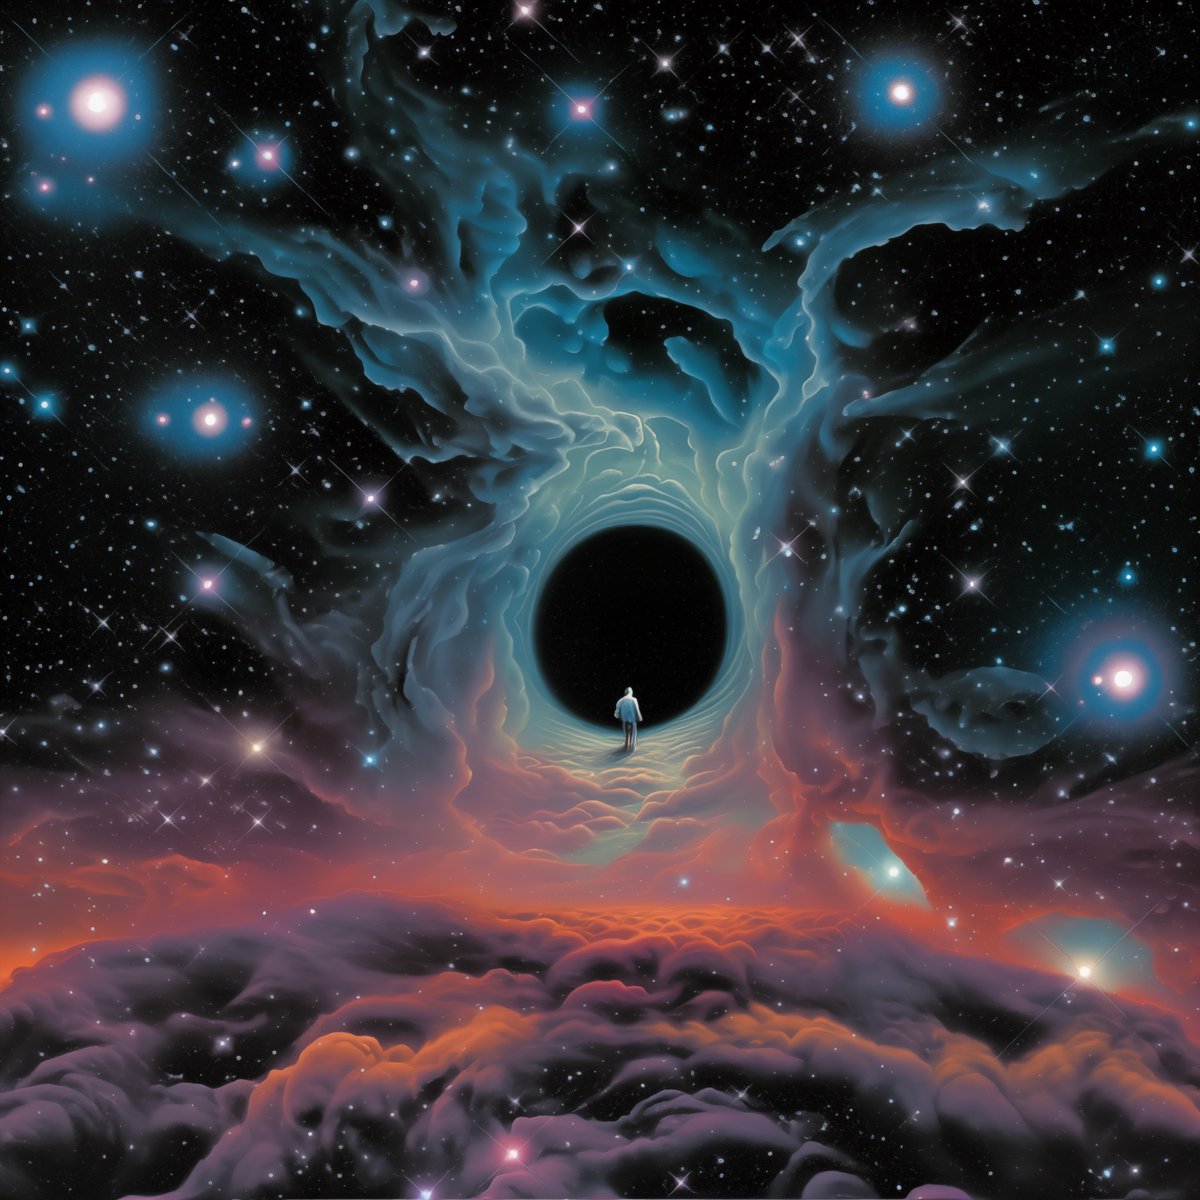 The infinite void 🕳️

#scifiart #Scifisaga #fantasyart #adventuretime #AIArtwork #AIArtCommuity #AnimeArt #AIアート #AIイラスト #ComicArt #nebula #SciFiFri #hubbleart #outerspace #Hubble #nebula #HubbleFriday #NASA